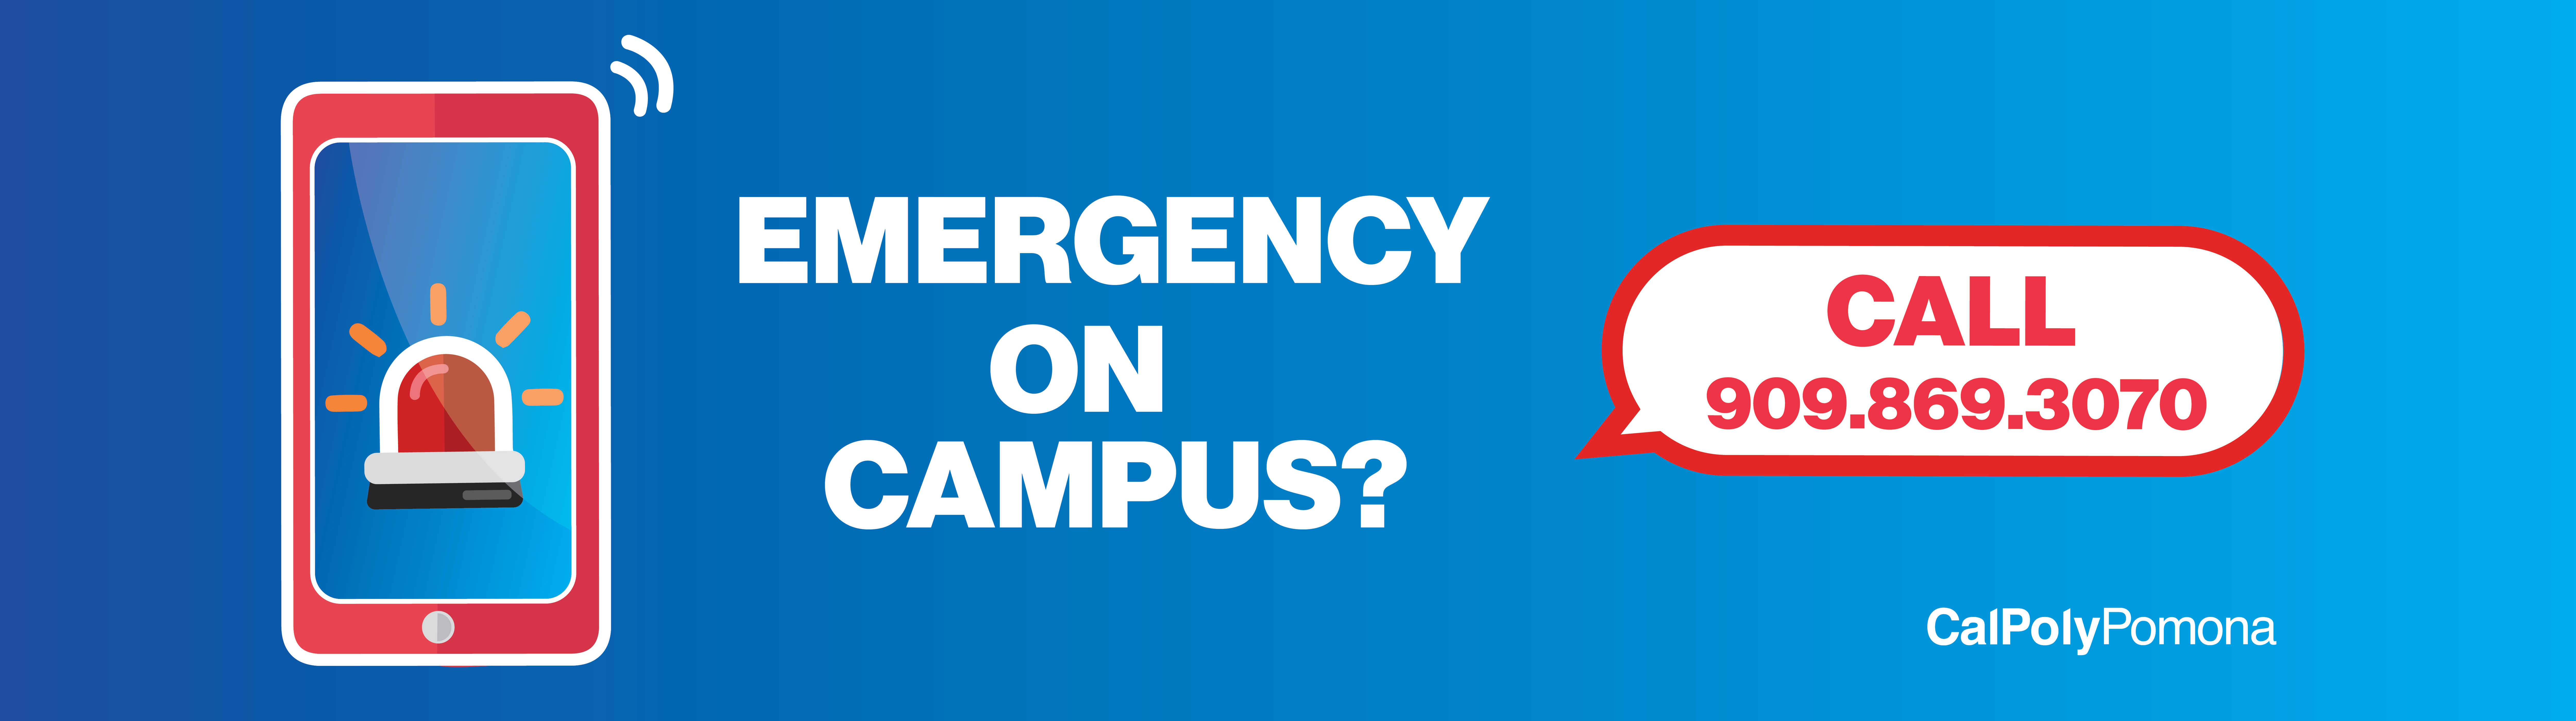 Emergency on Campus banner